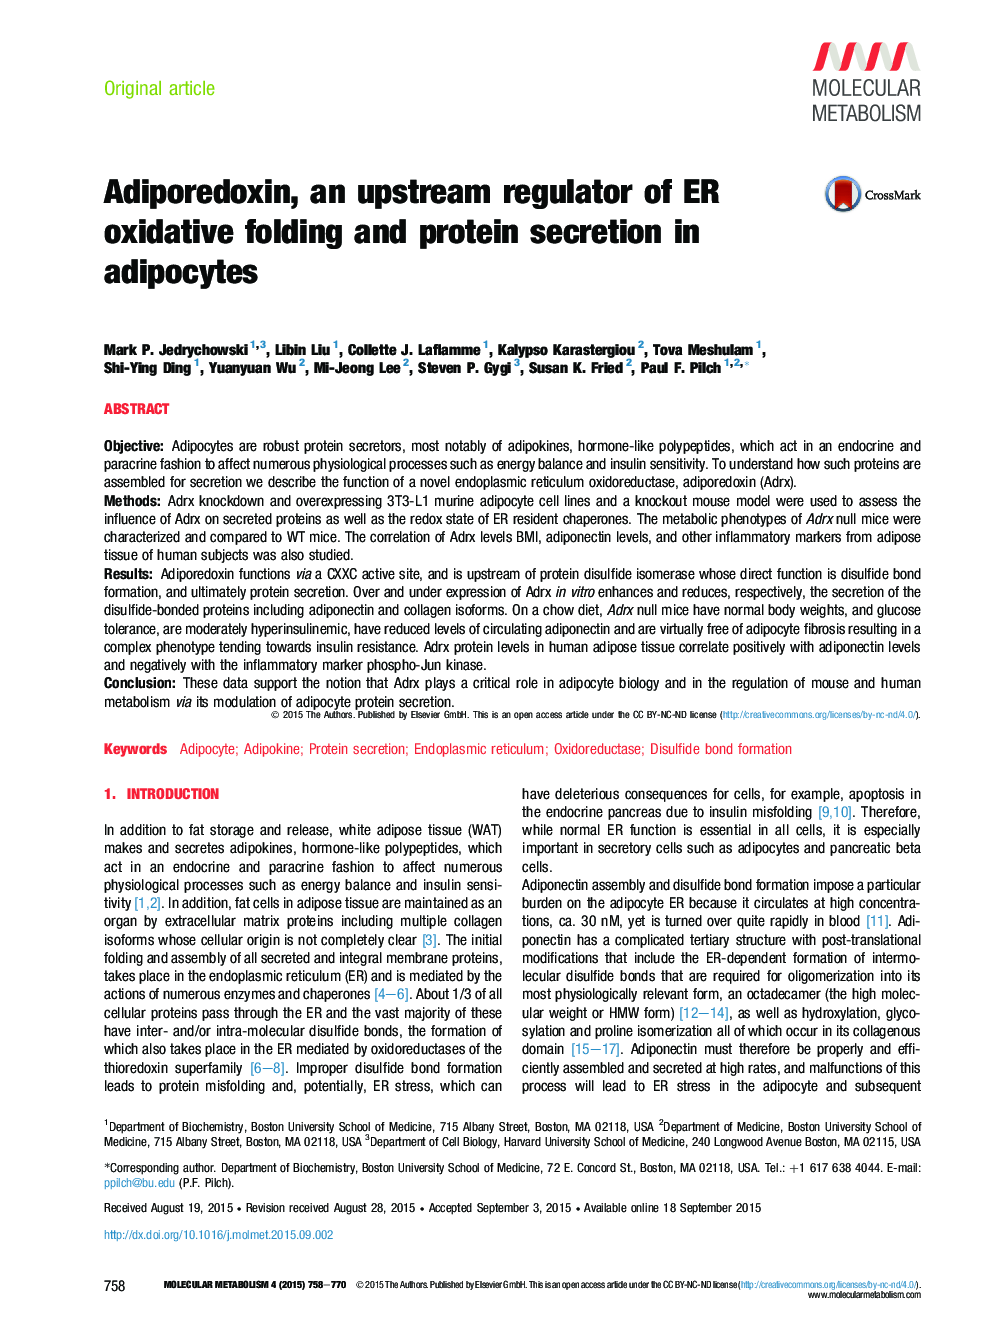 آدیپوریدوکسین، تنظیم کننده پیشرفته ترشح اکسیداتیو اوره و ترشح پروتئین در آدیپوسیت ها 